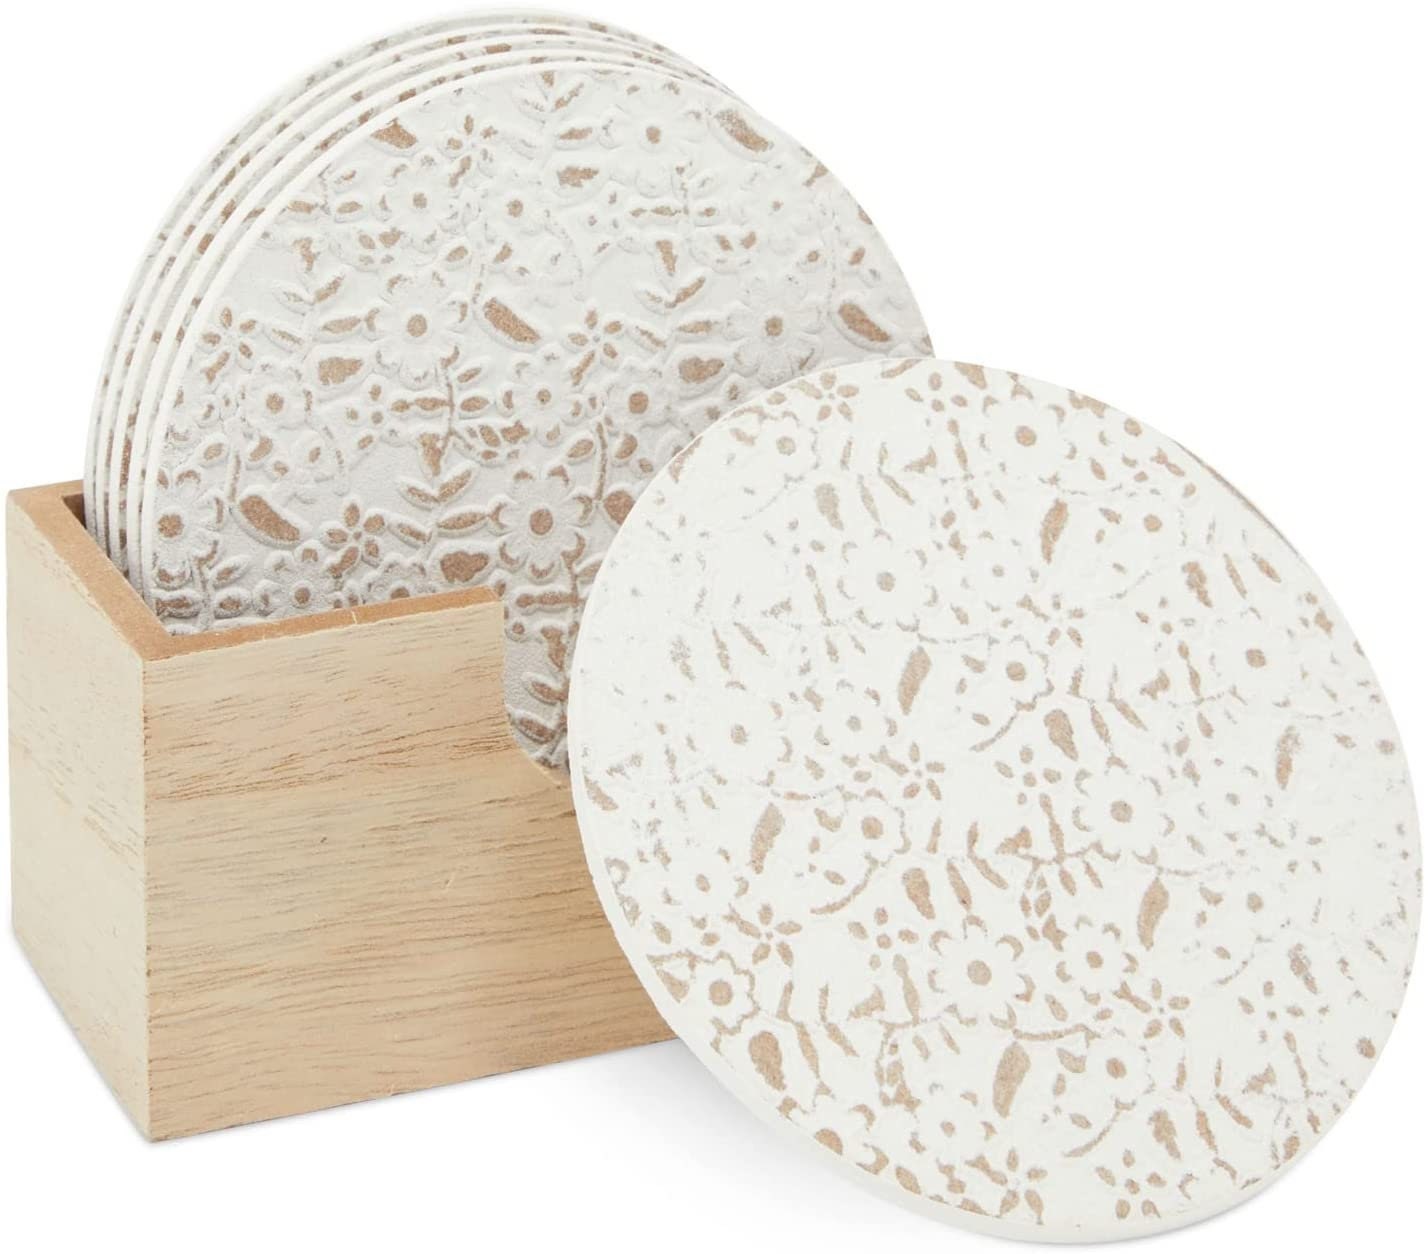 Farmhouse Ceramic Coasters Set of 4 In Gift Box White Wash Wood